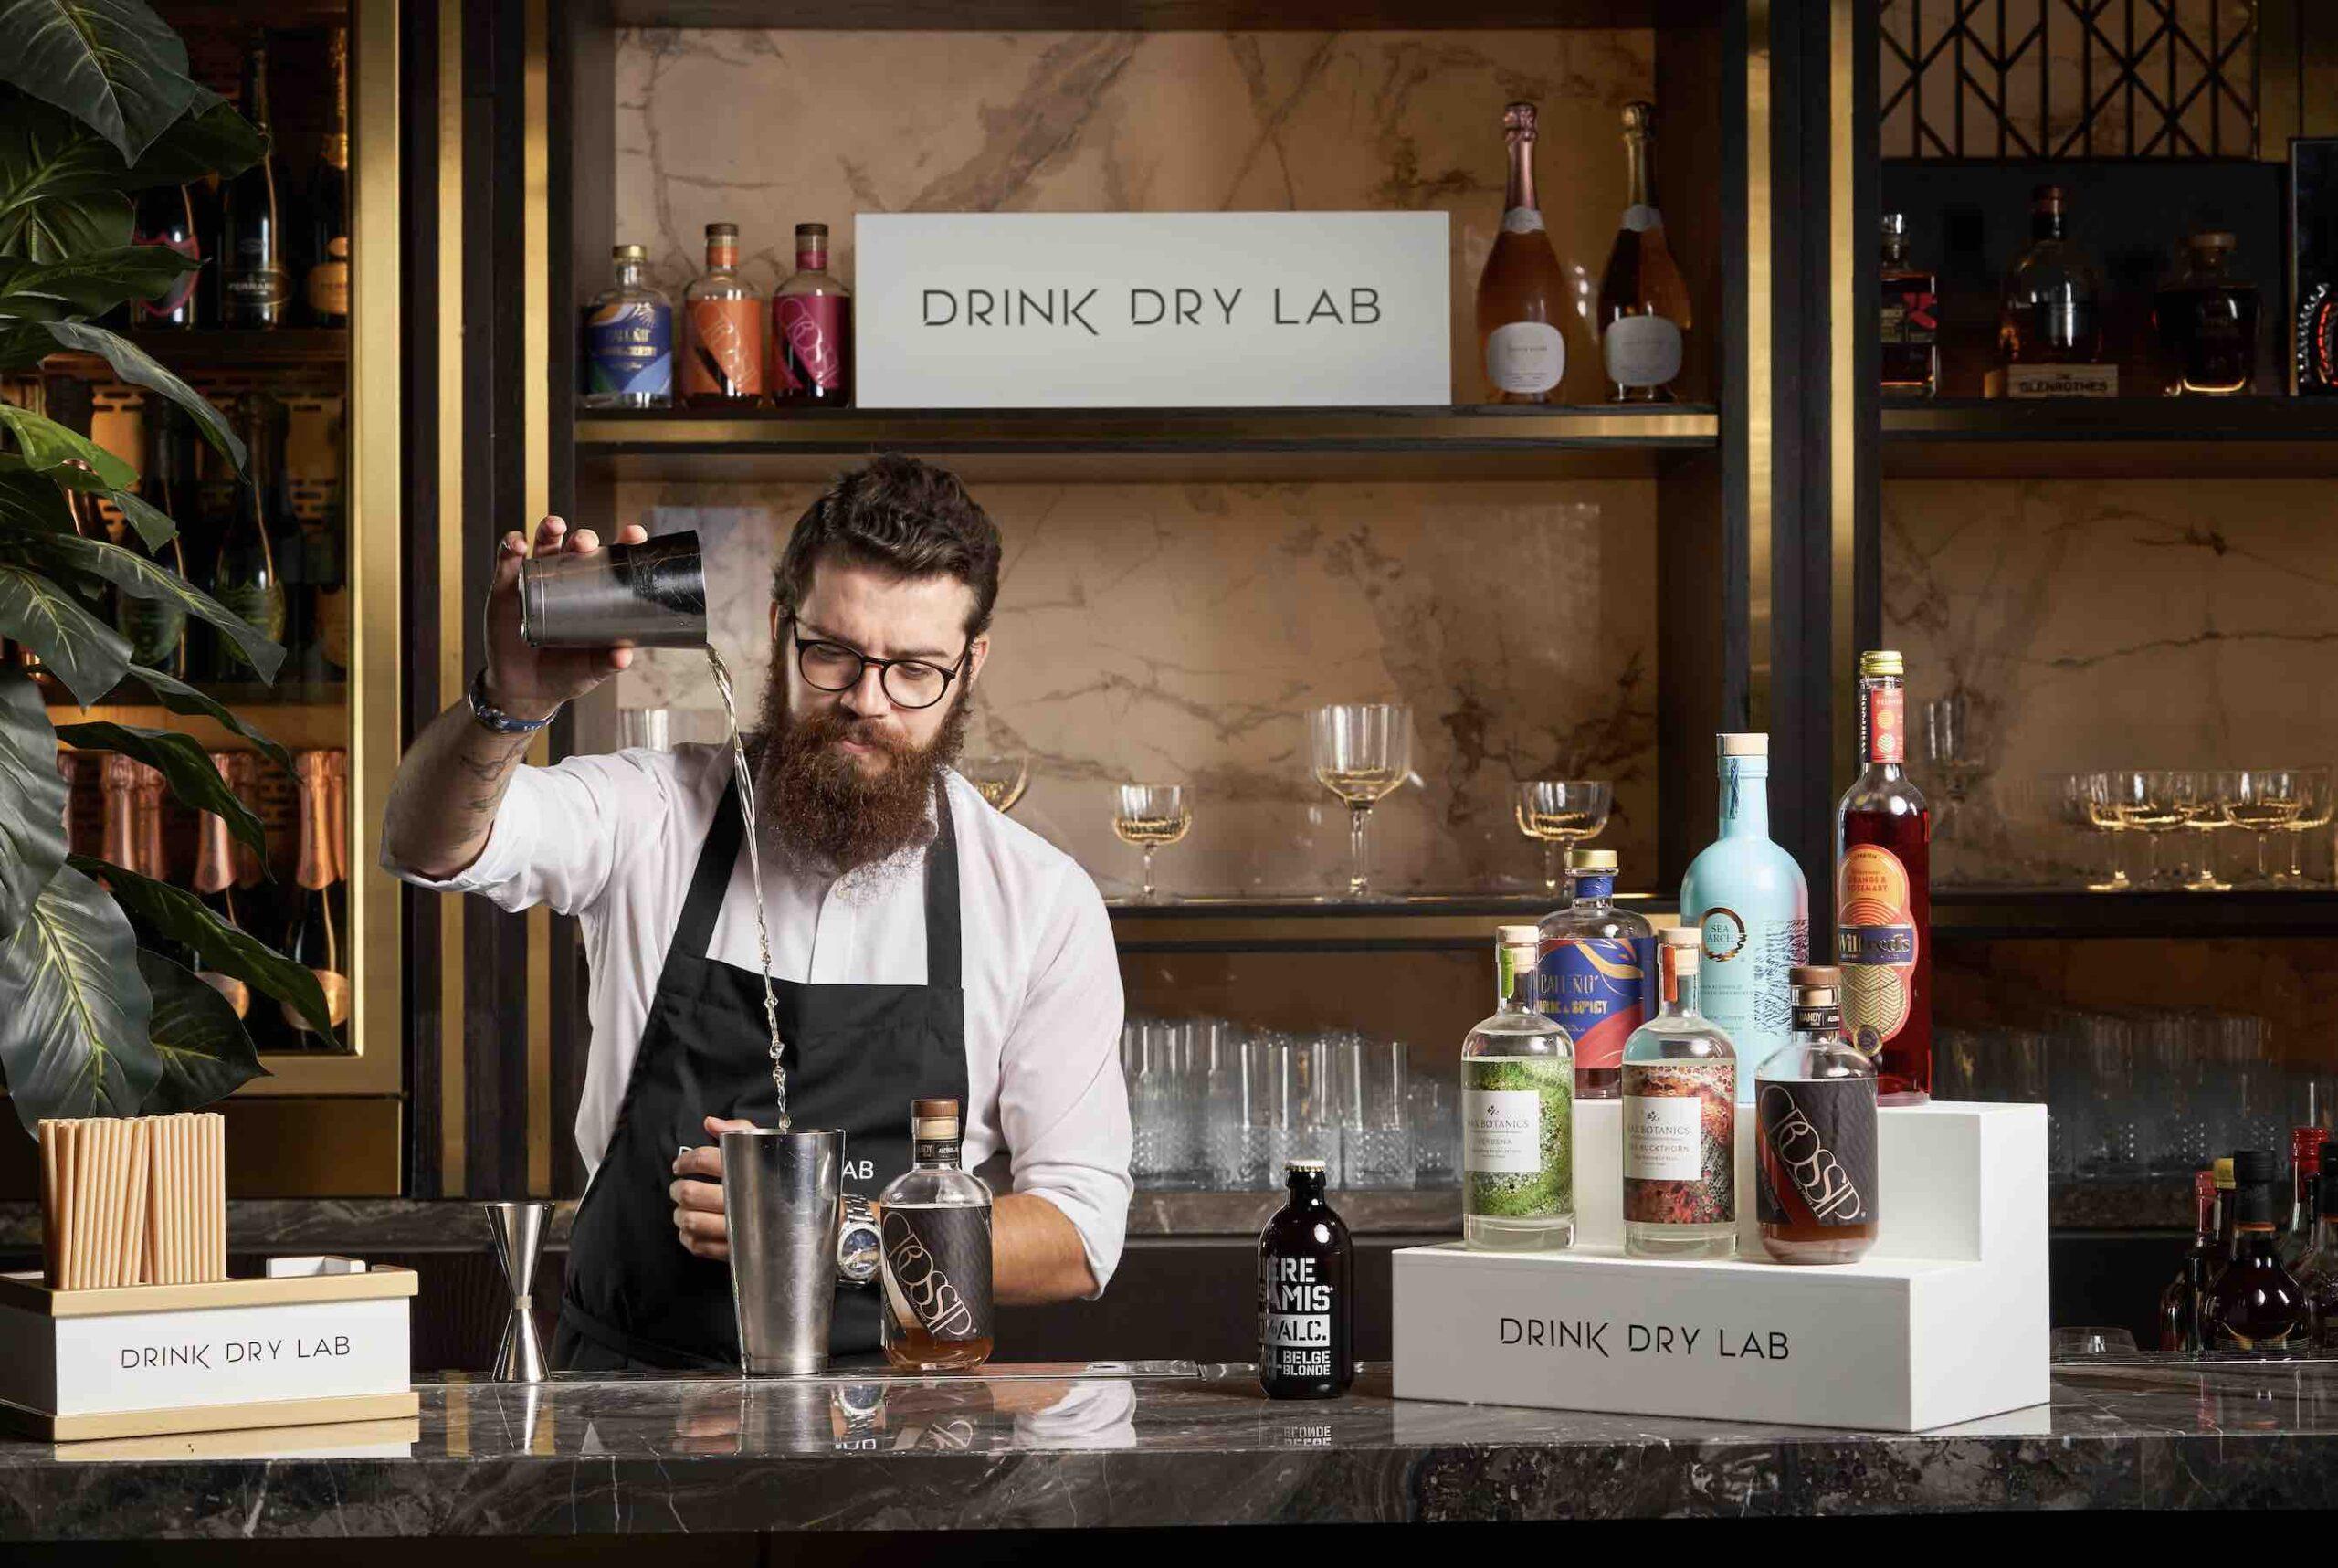 The Drink Dry Lab is Dubai's new zero-alcohol bar